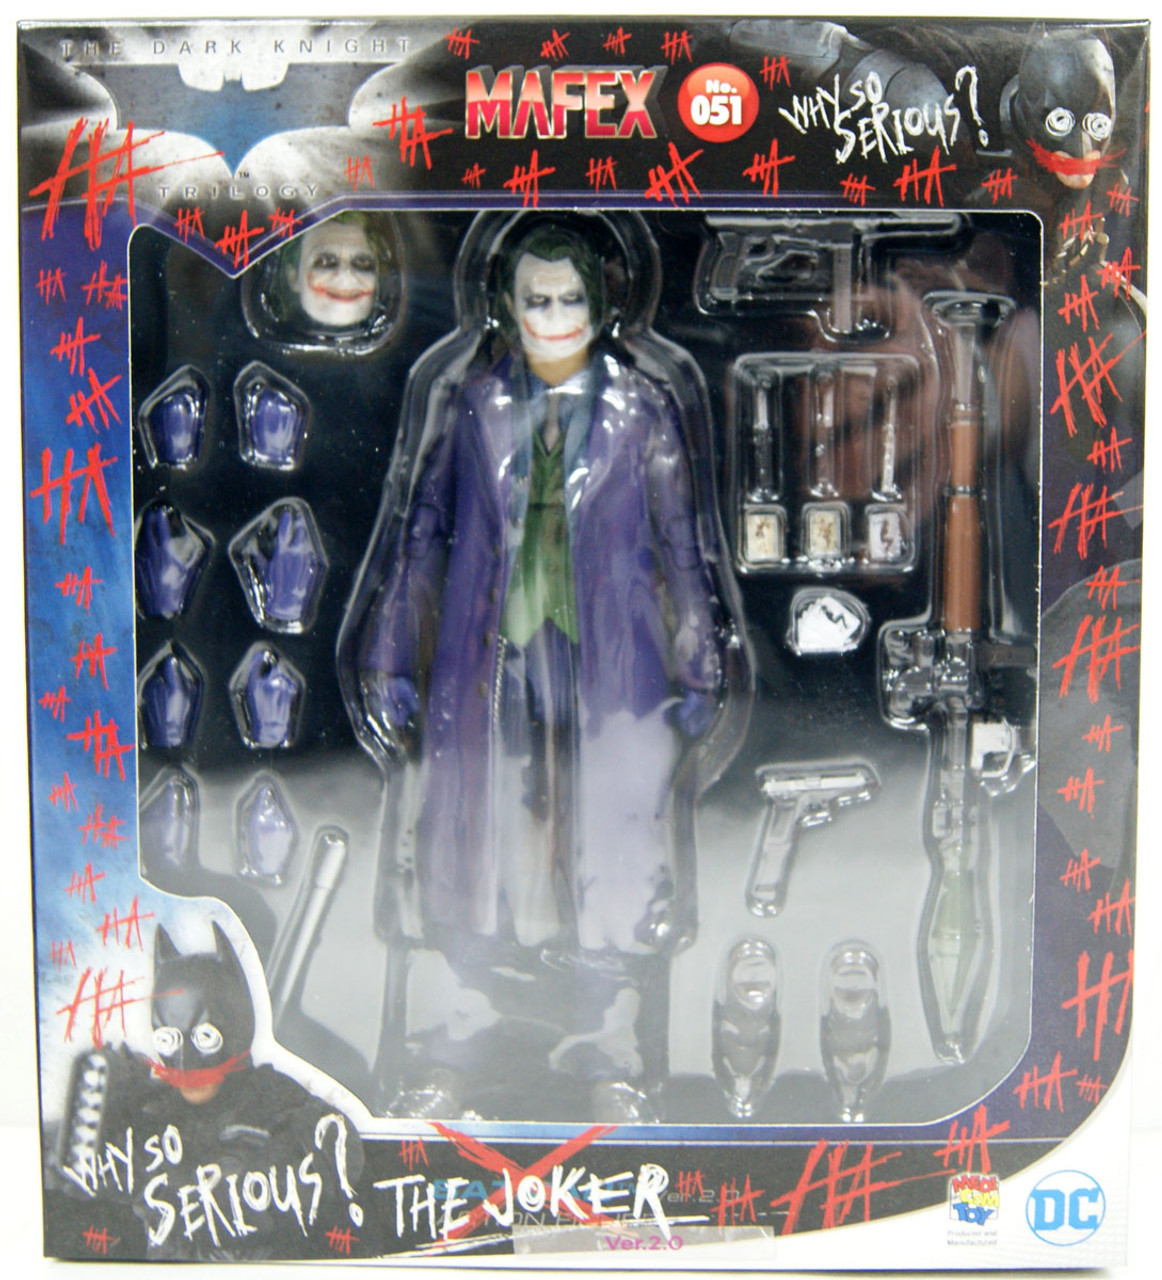 Medicom MafEX Batman the Dark Knight The Joker #051 action figure